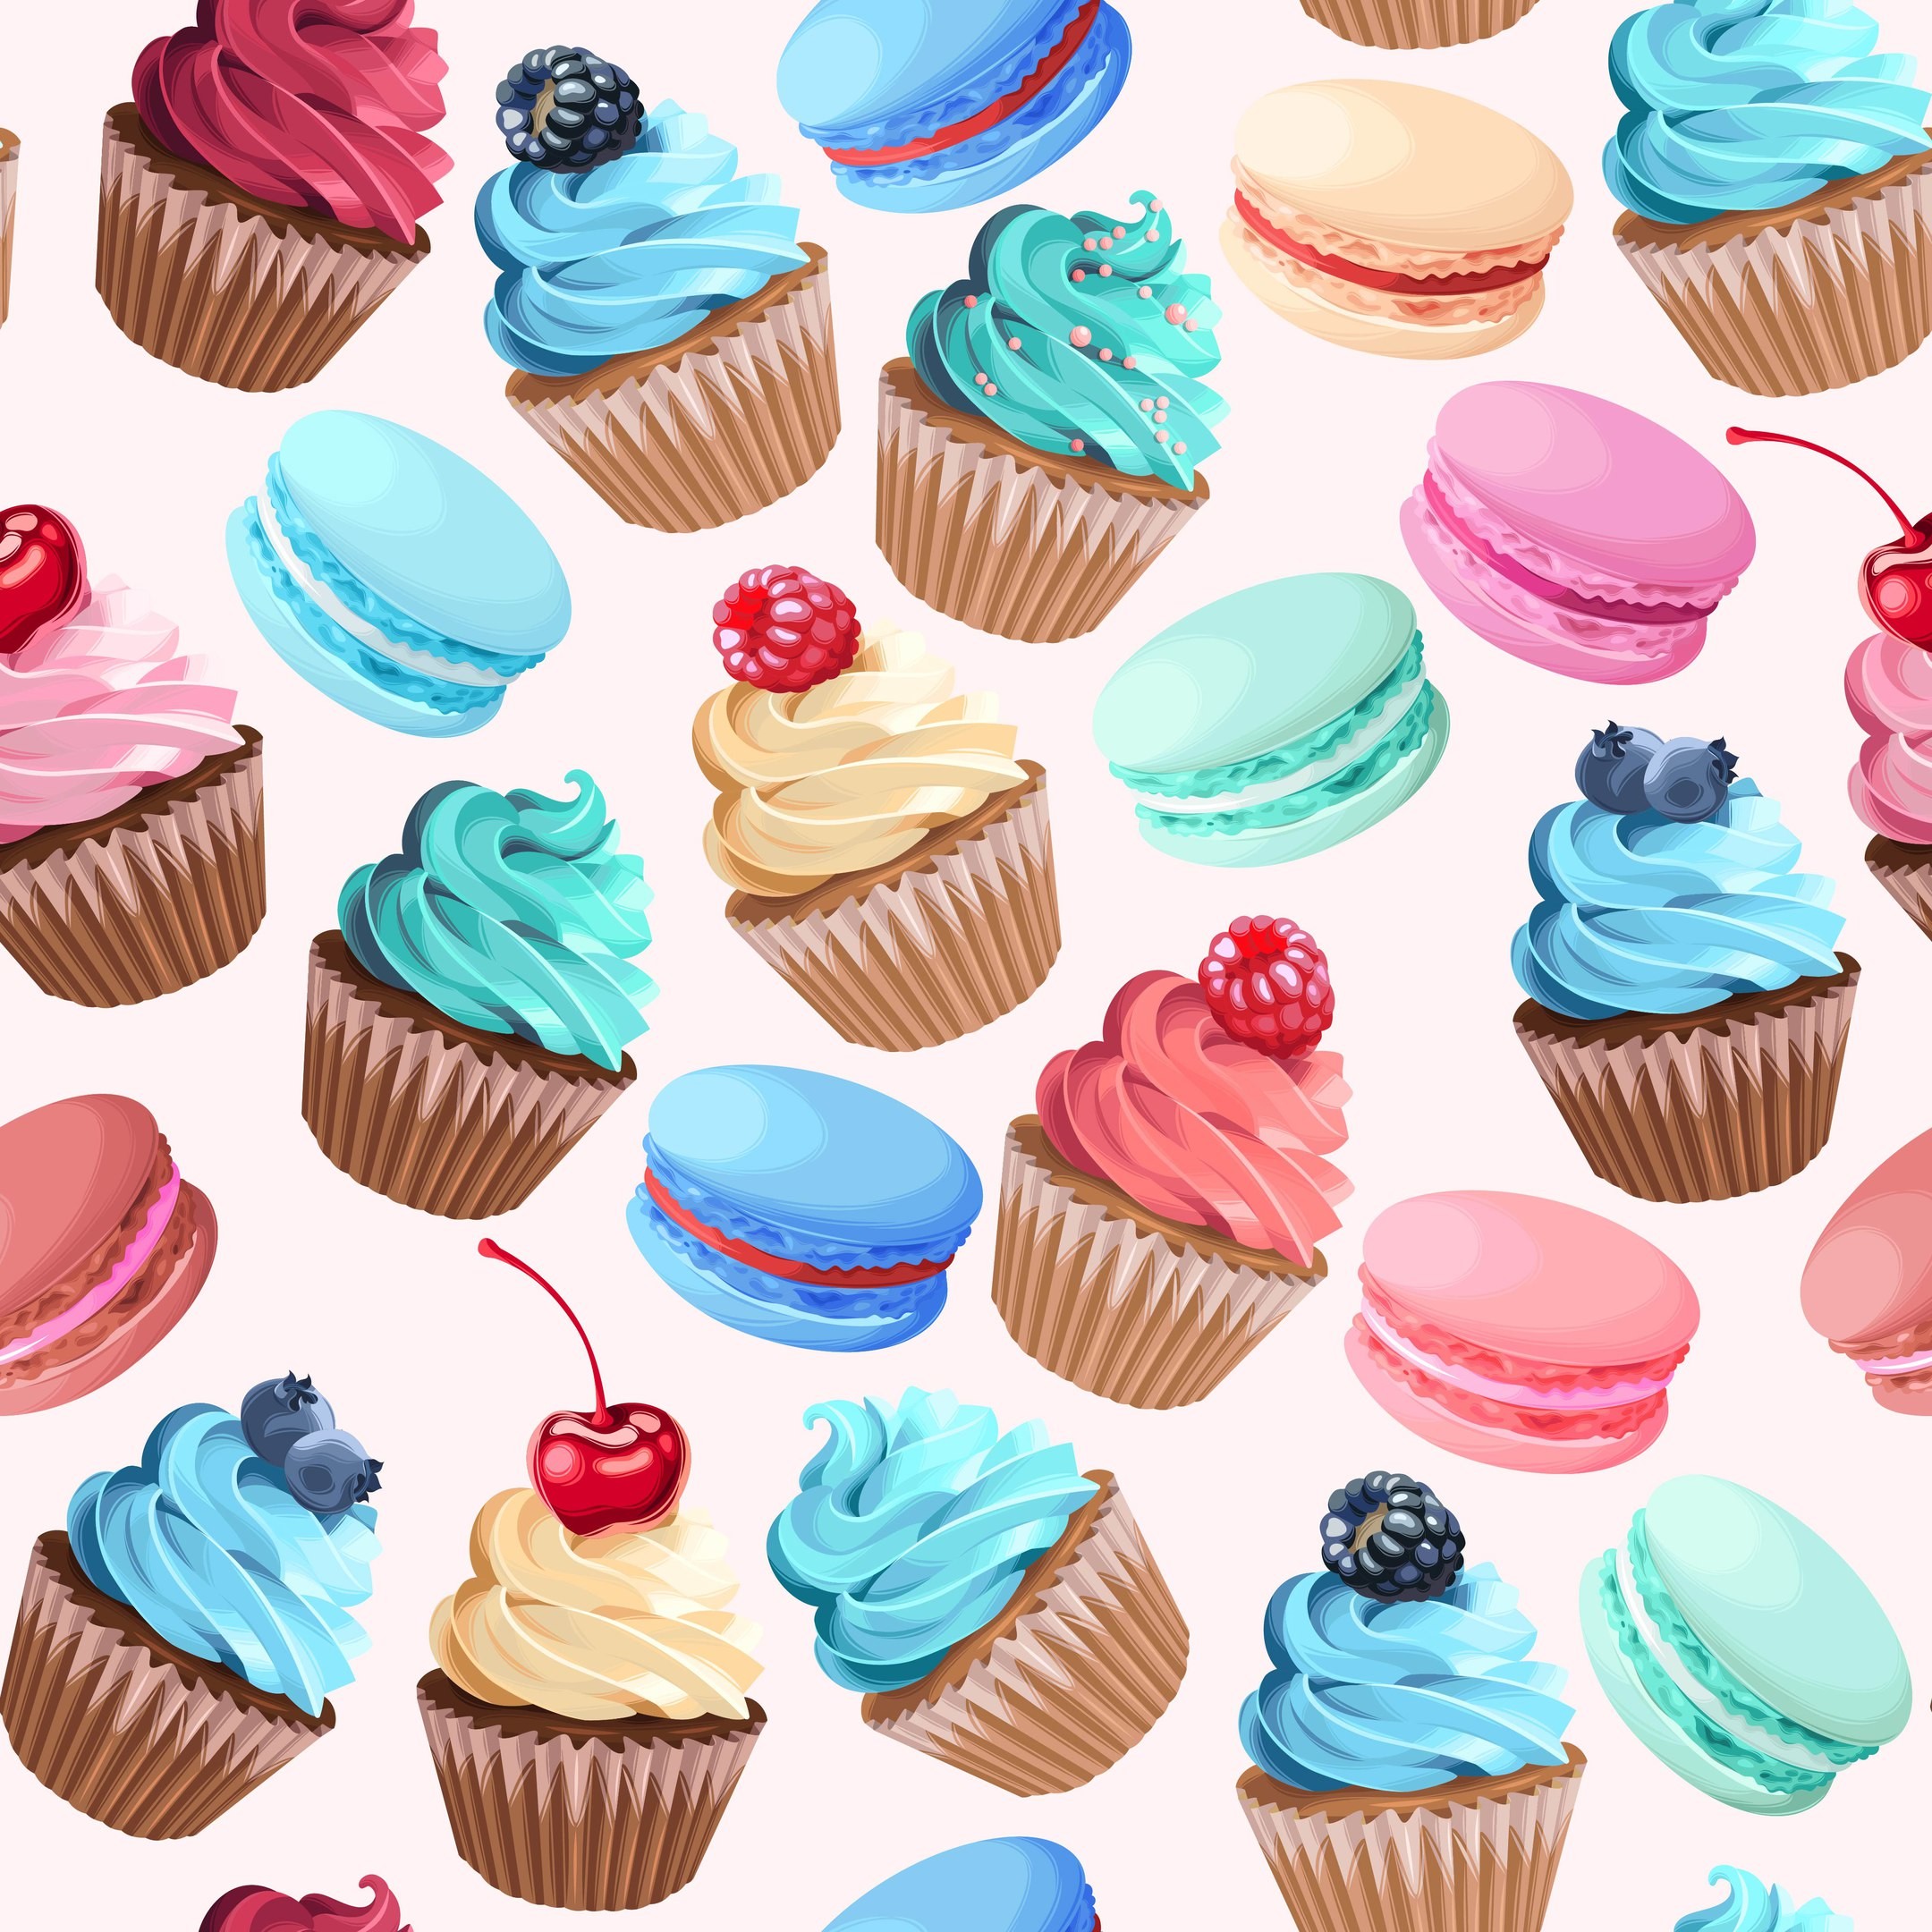 2160x2160 Background, illustration, pattern, cute, art, food, sweet, cupcakes